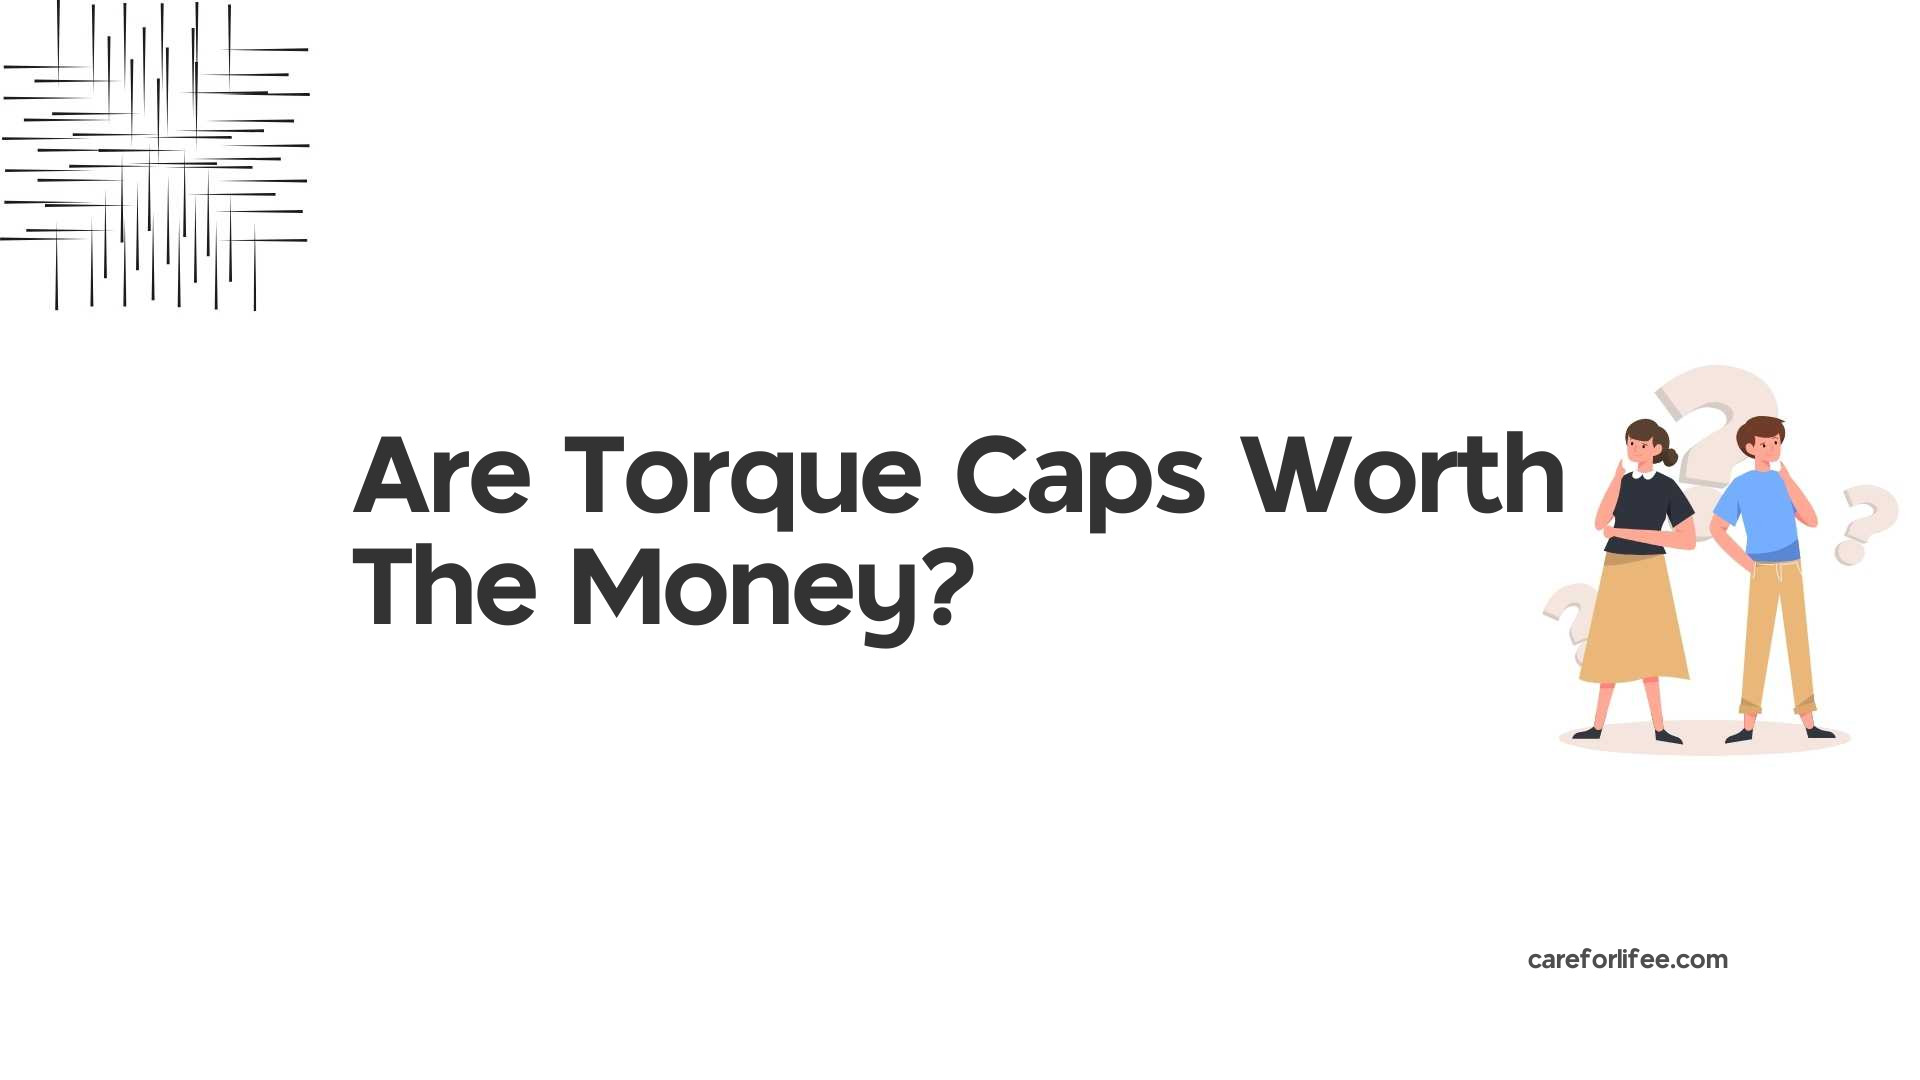 Are Torque Caps Worth The Money?